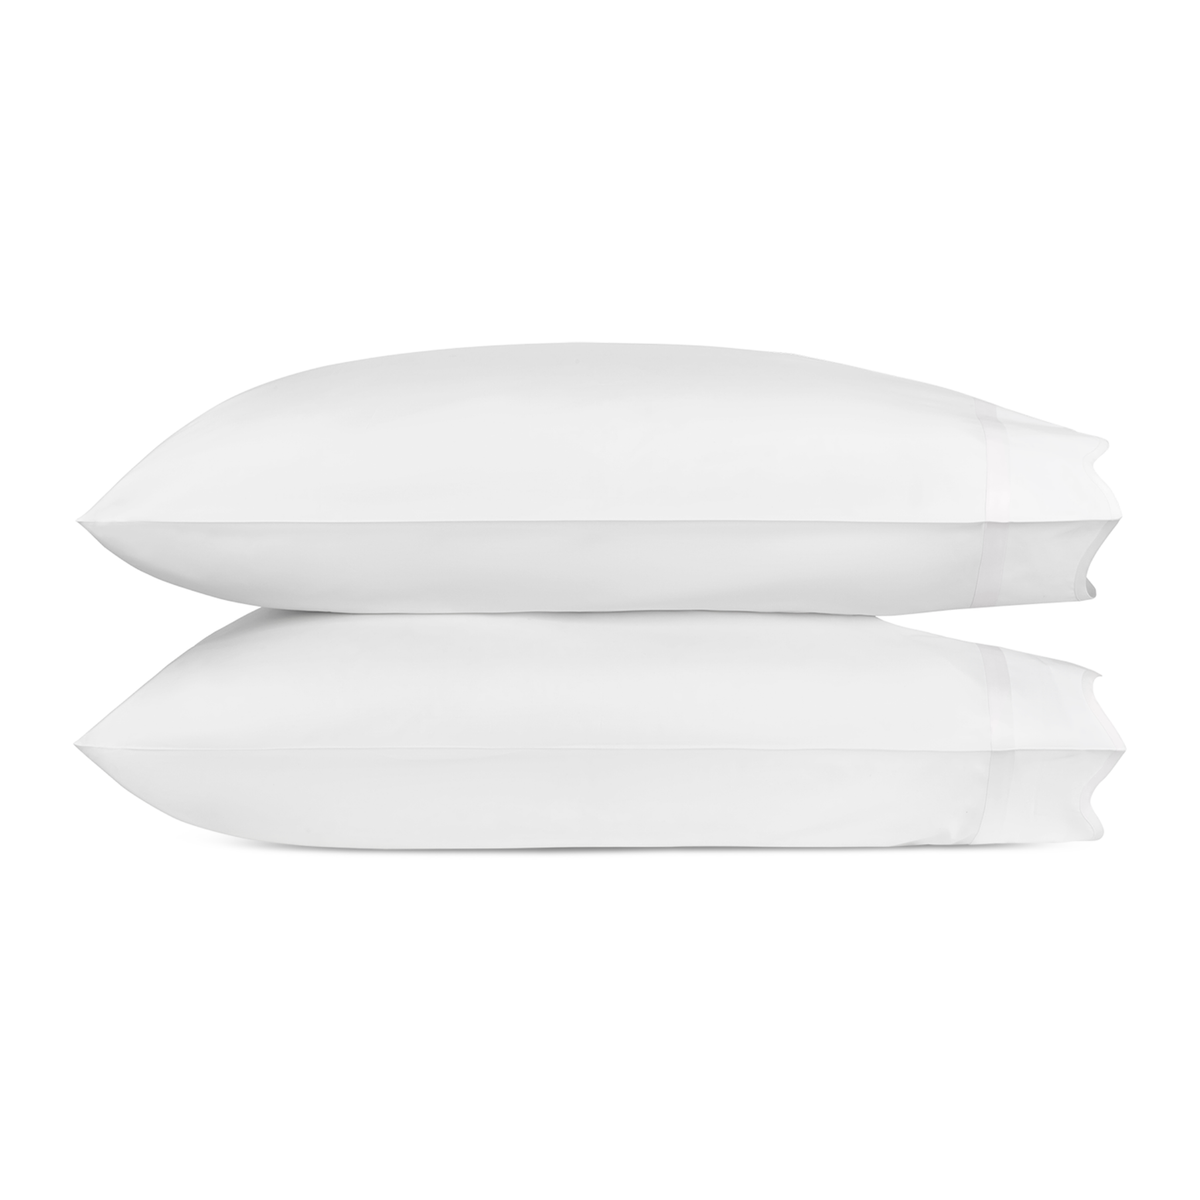 Pair of Pillowcases of Matouk Cornelia Bedding in White Color